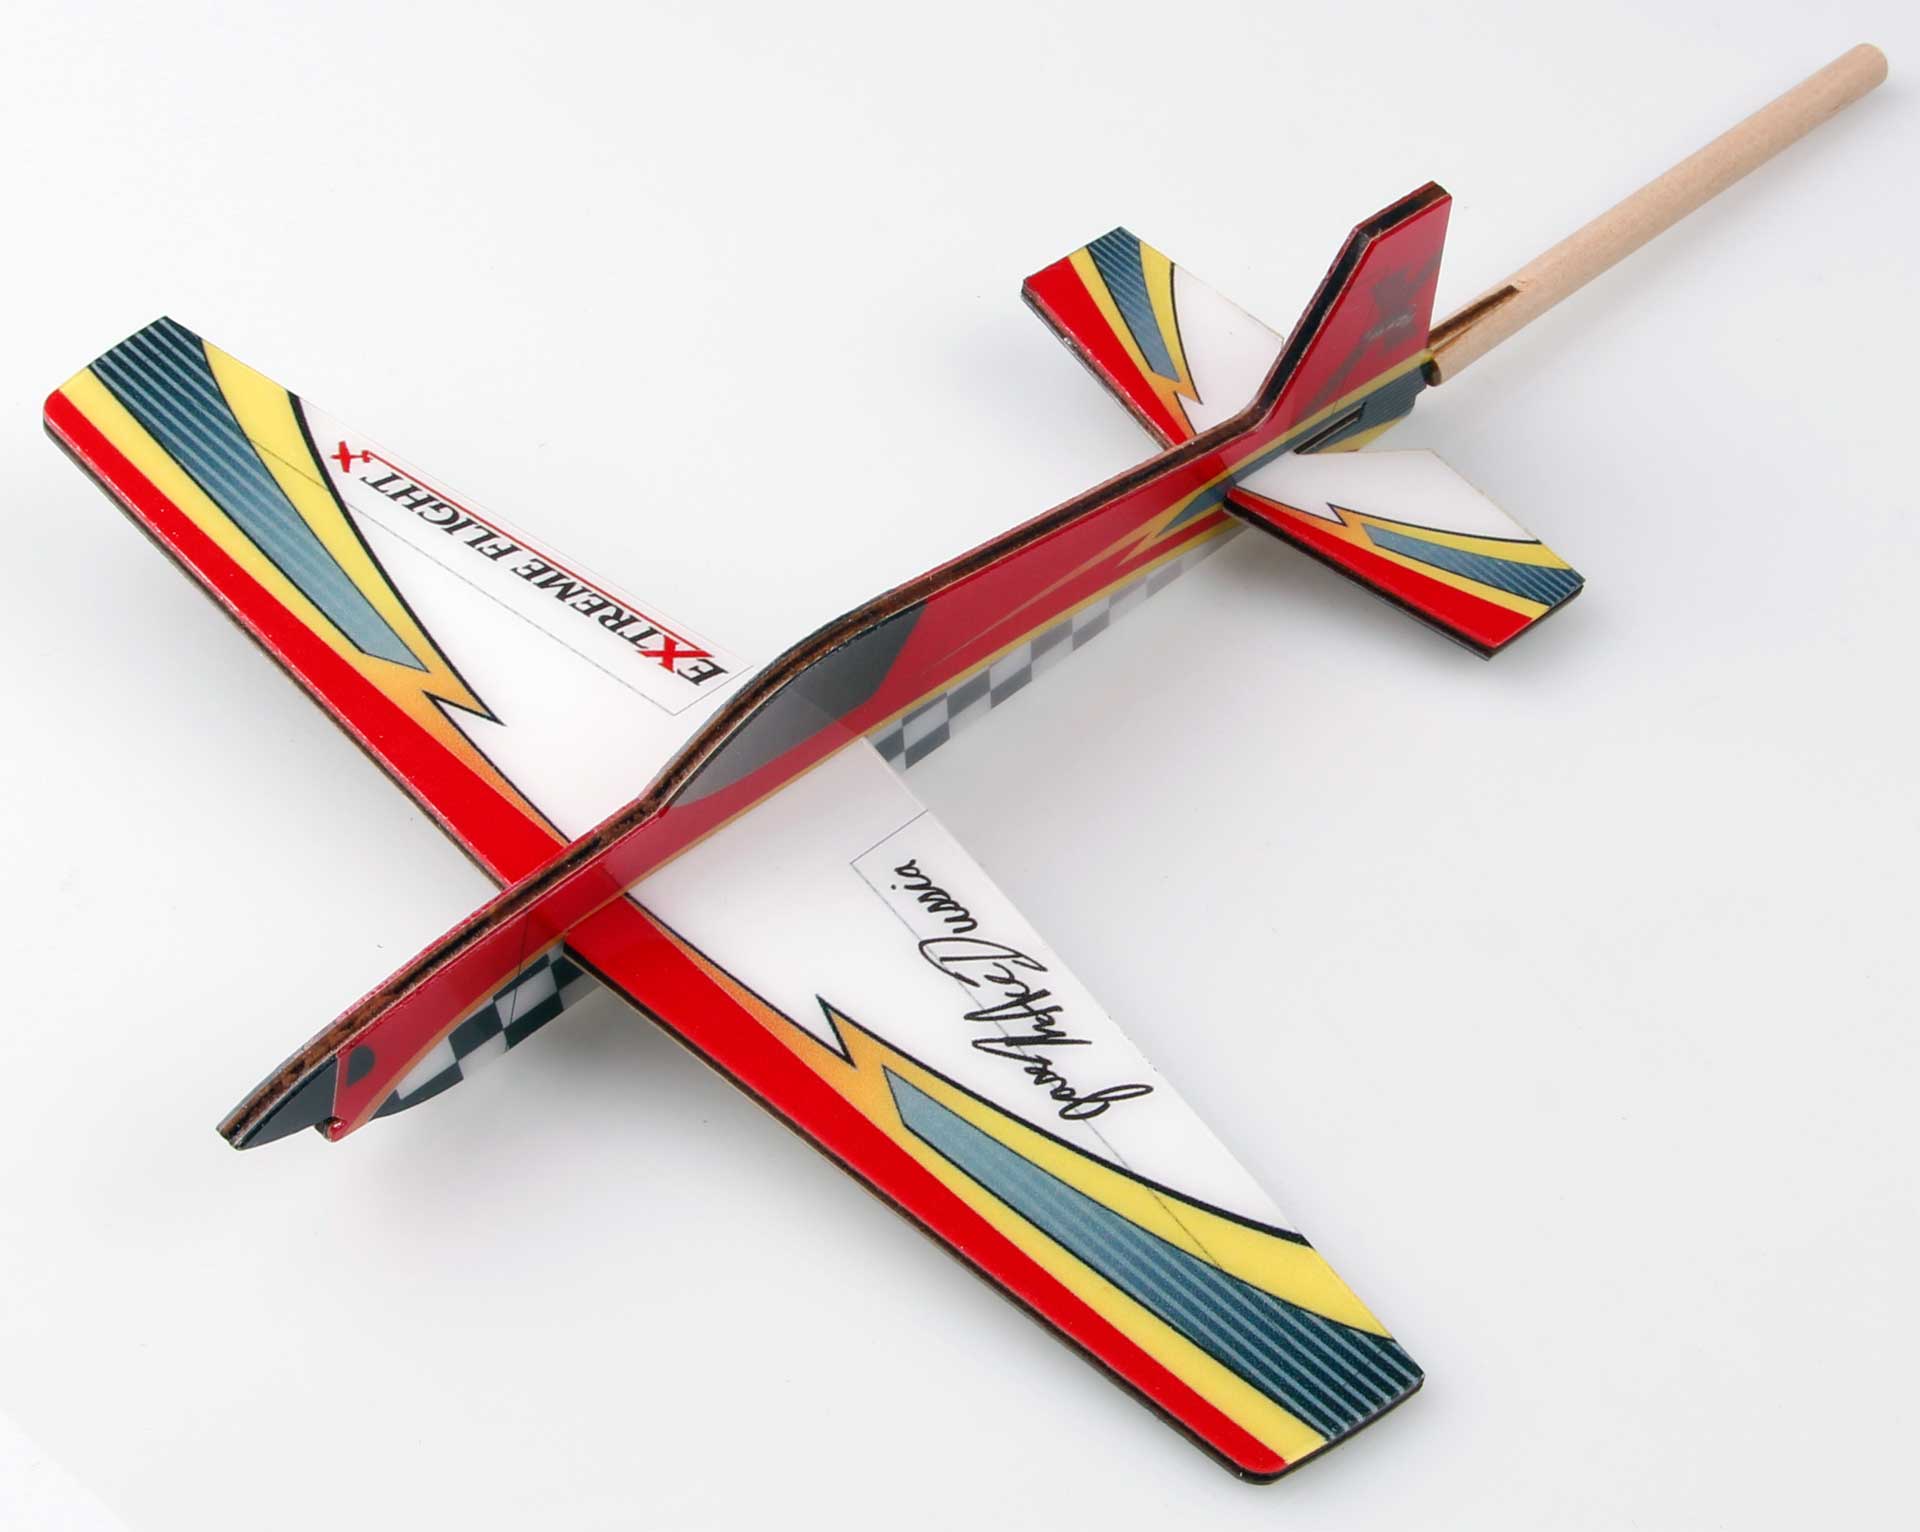 EXTREMEFLIGHT-RC Slick Jase printed Stick Plane